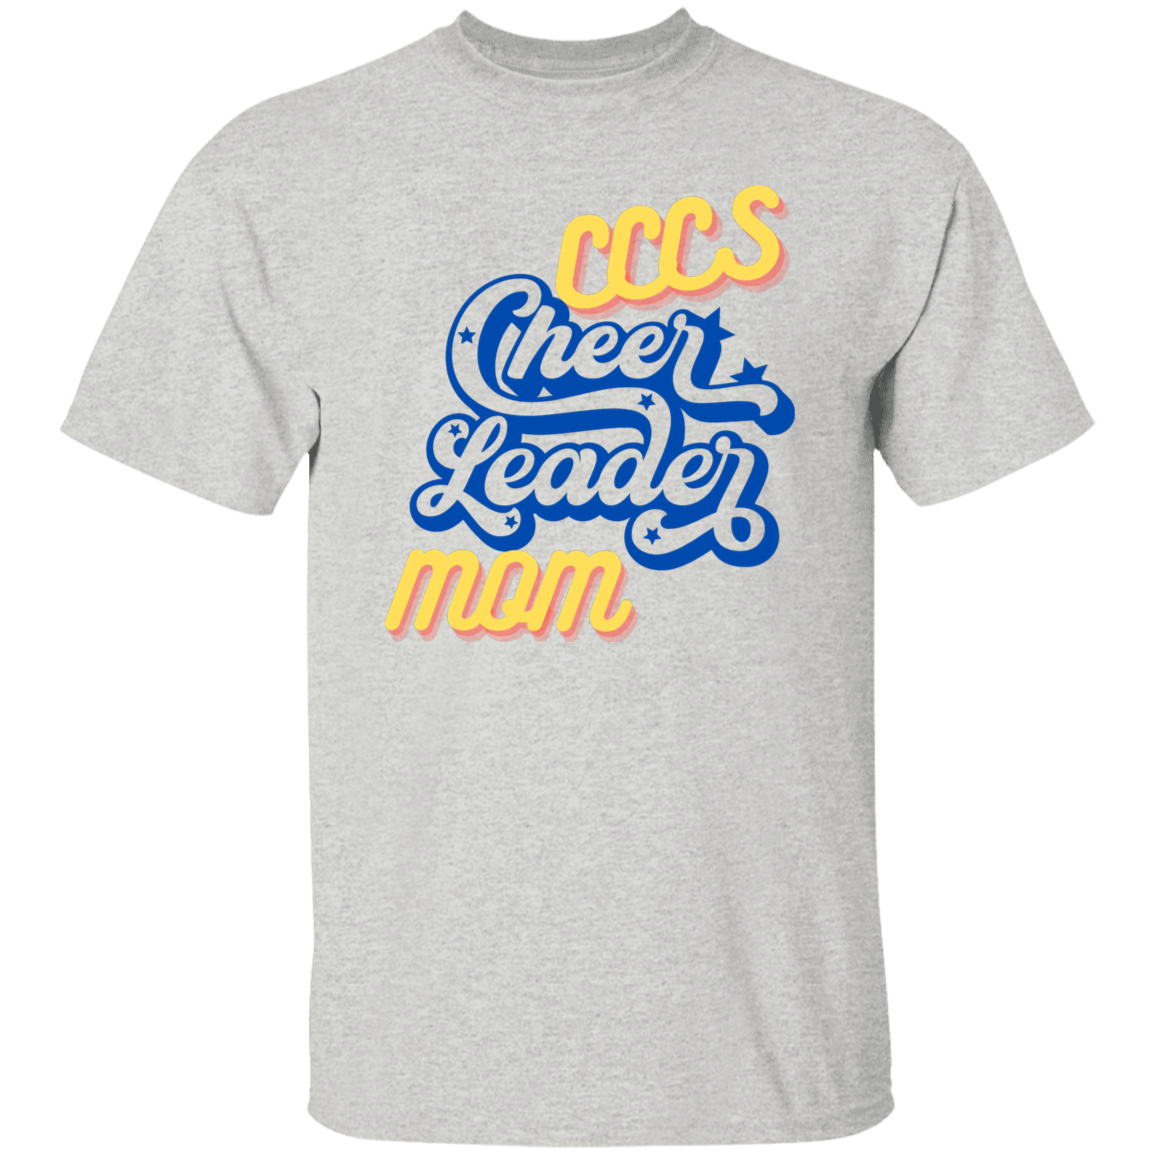 CCCS Cheer Mom Adult T-Shirt